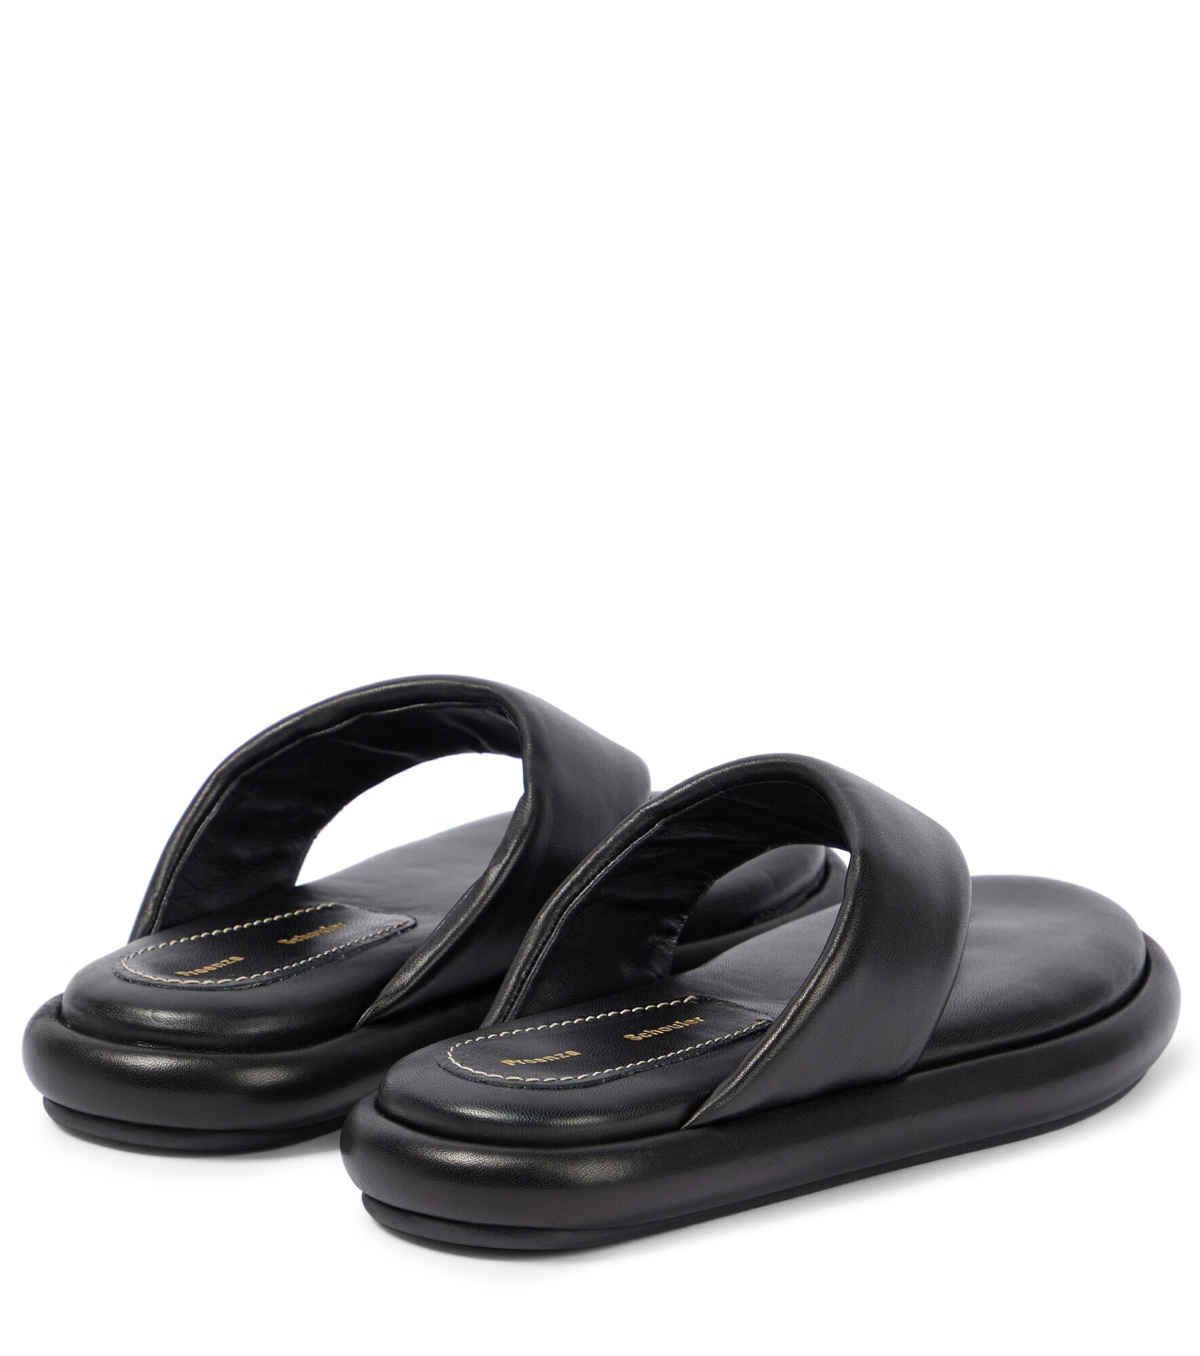 Proenza Schouler - Pipe leather thong sandals Proenza Schouler